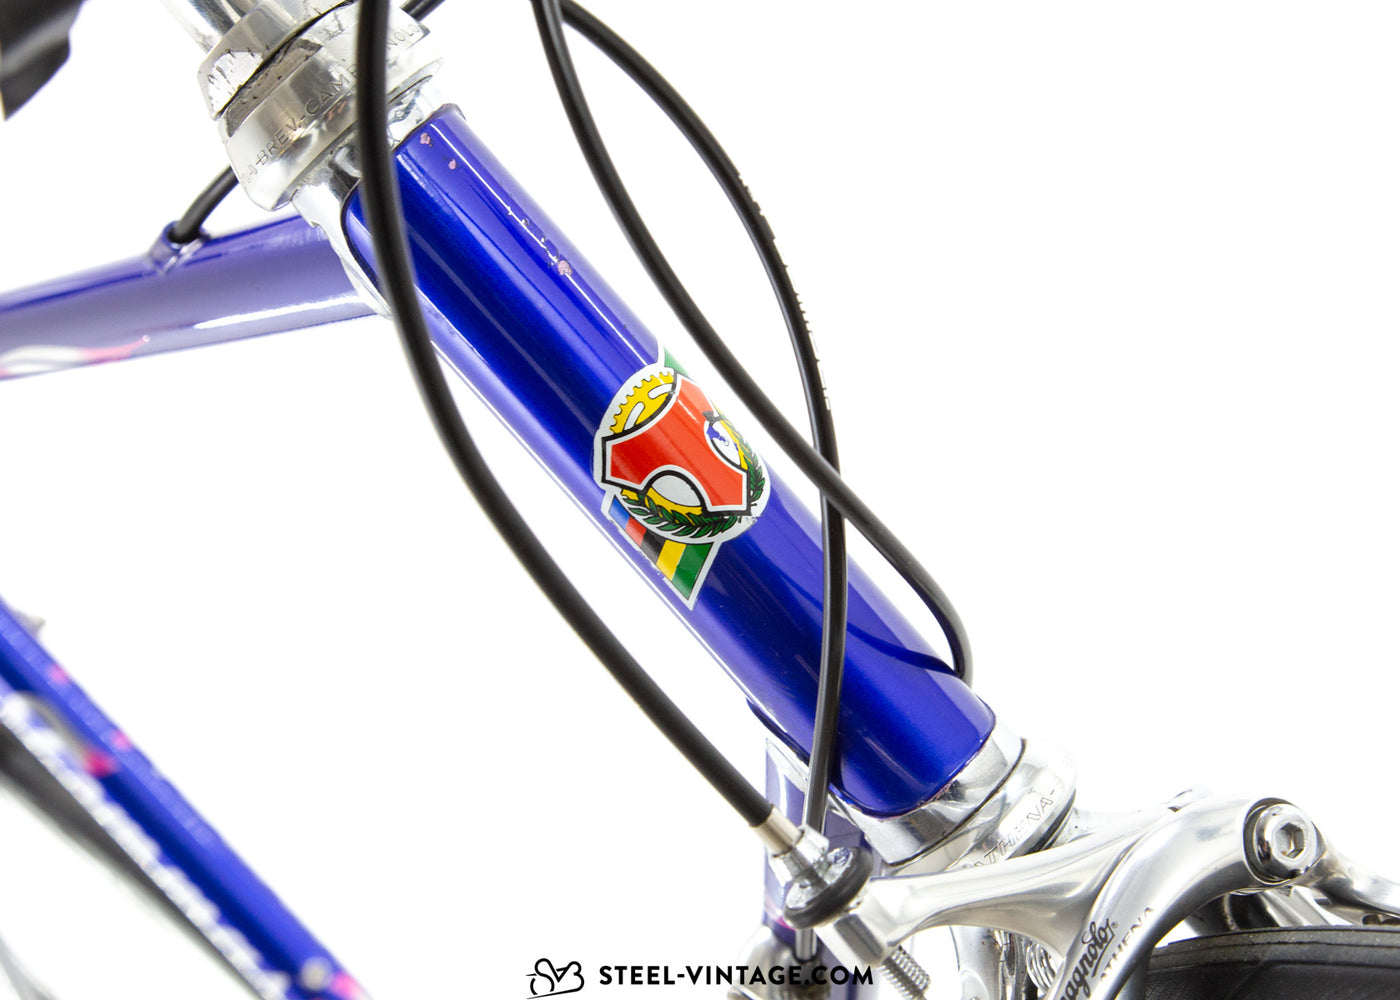 1990 年代 Tommasini Super Prestige 公路自行车